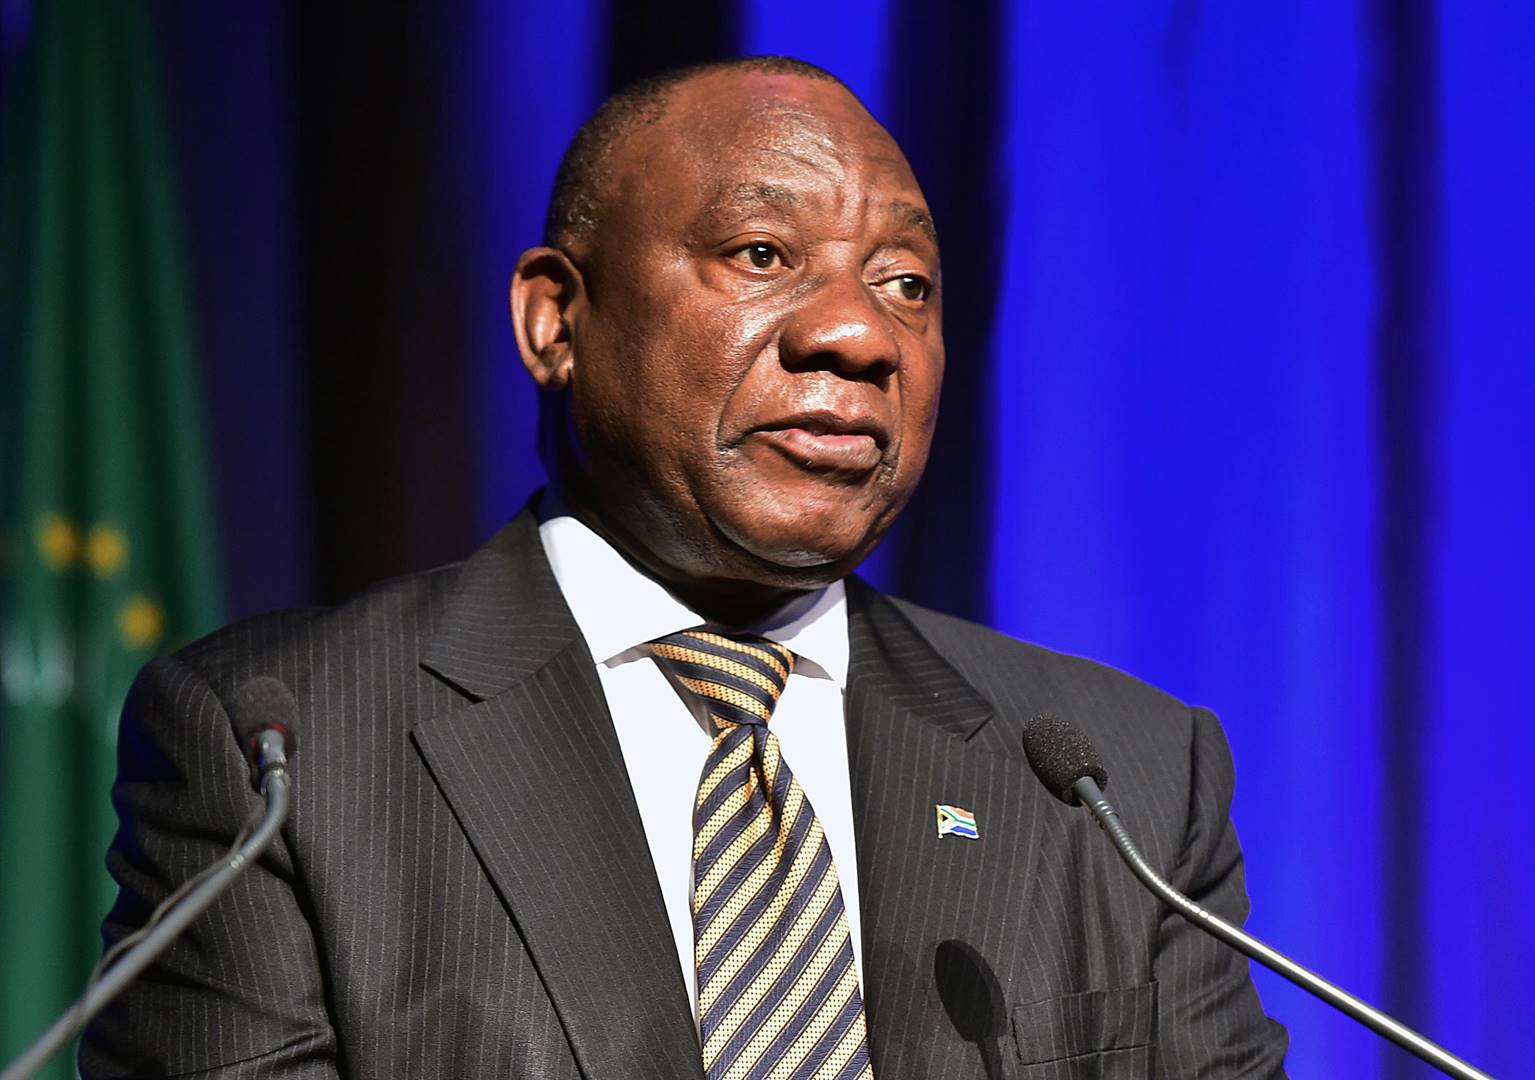 News24 | BHP bid for Anglo: Presidency comes out swinging over anti-SA narrative 